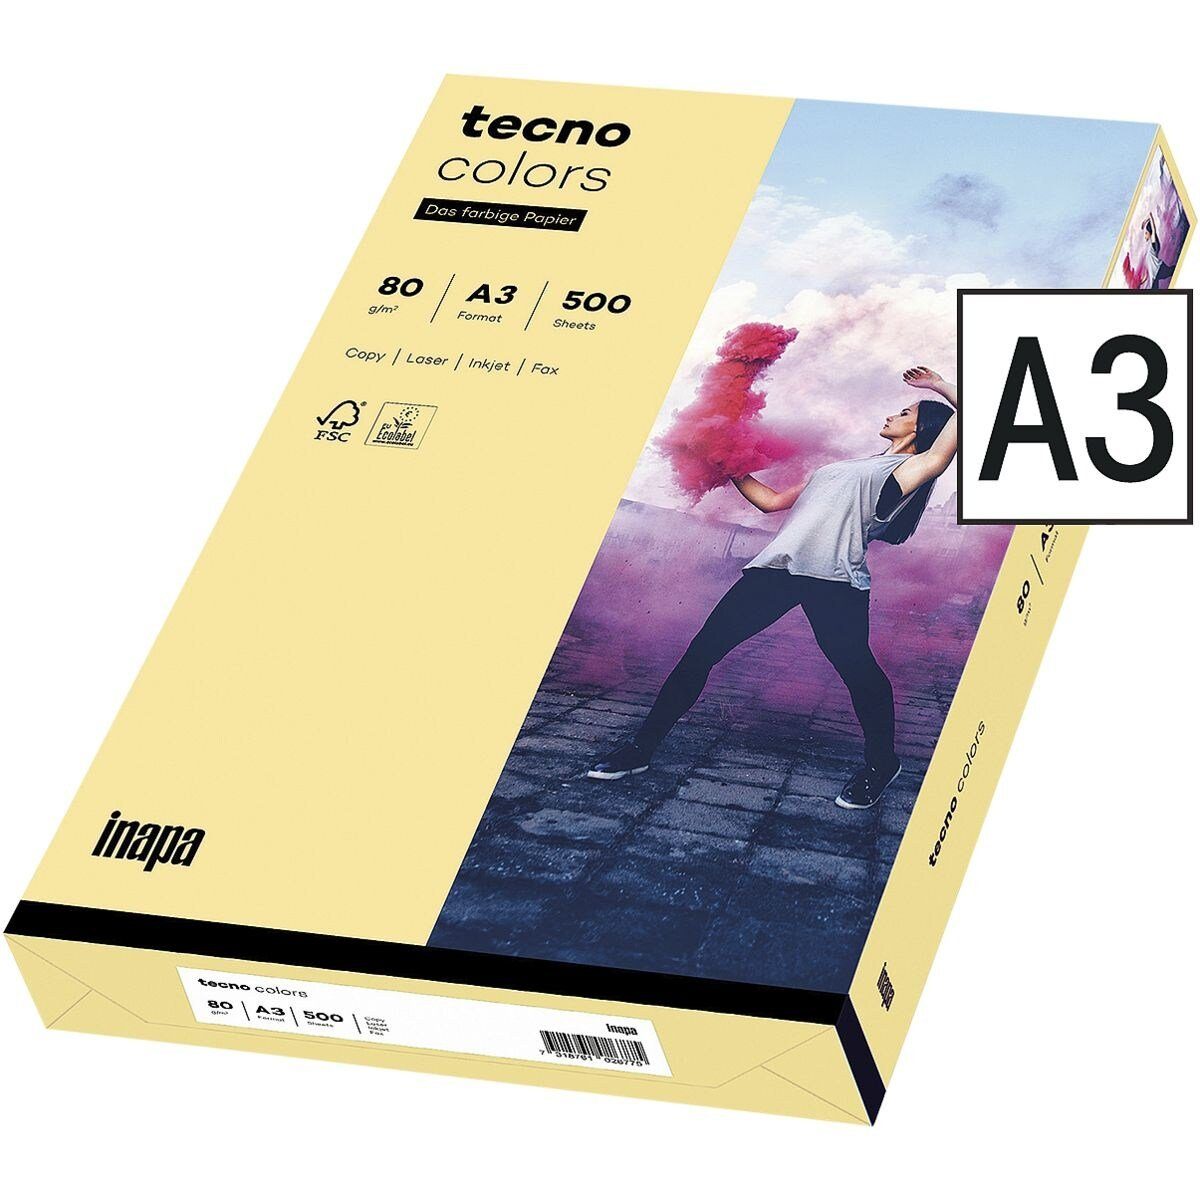 chamois 80 Format Inapa g/m², DIN tecno Kopierpapier Colors, / Blatt A3, 500 Drucker- Pastellfarben, und Rainbow tecno